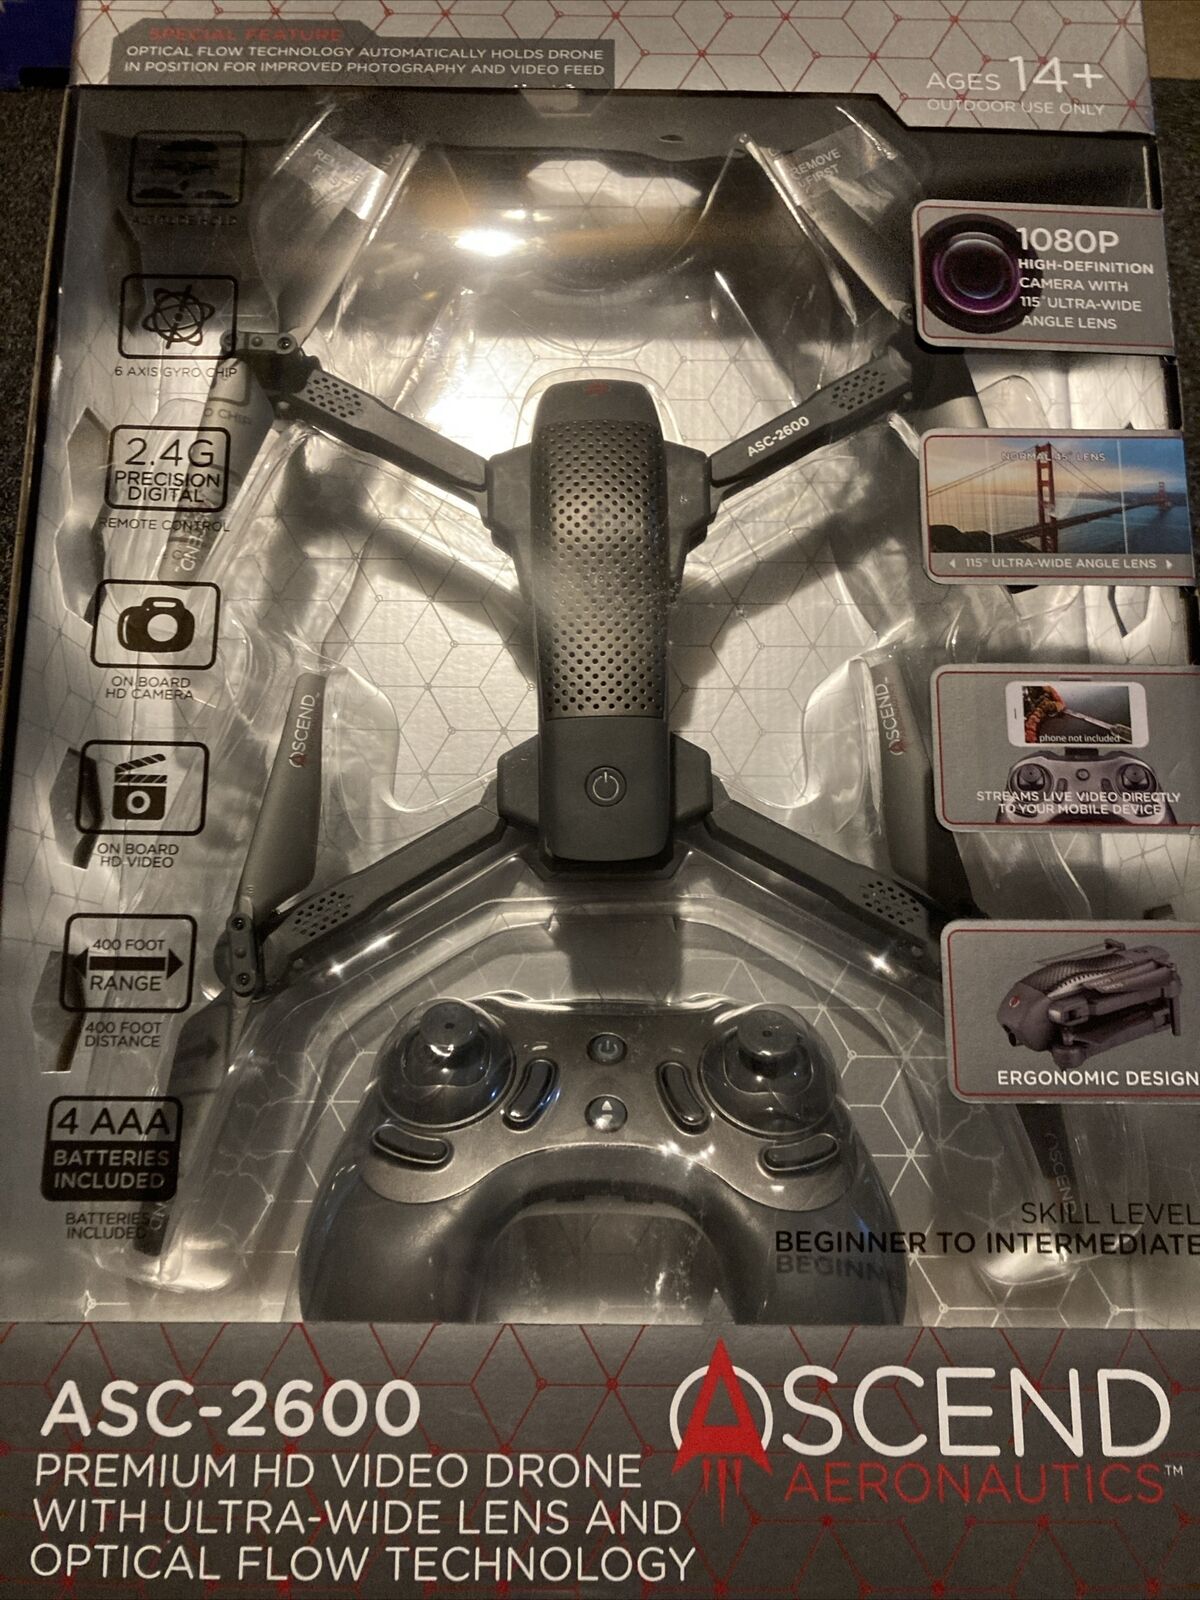 Ascend Aeronautics ASC-2600 Premium HD Video Drone 1080P Camera